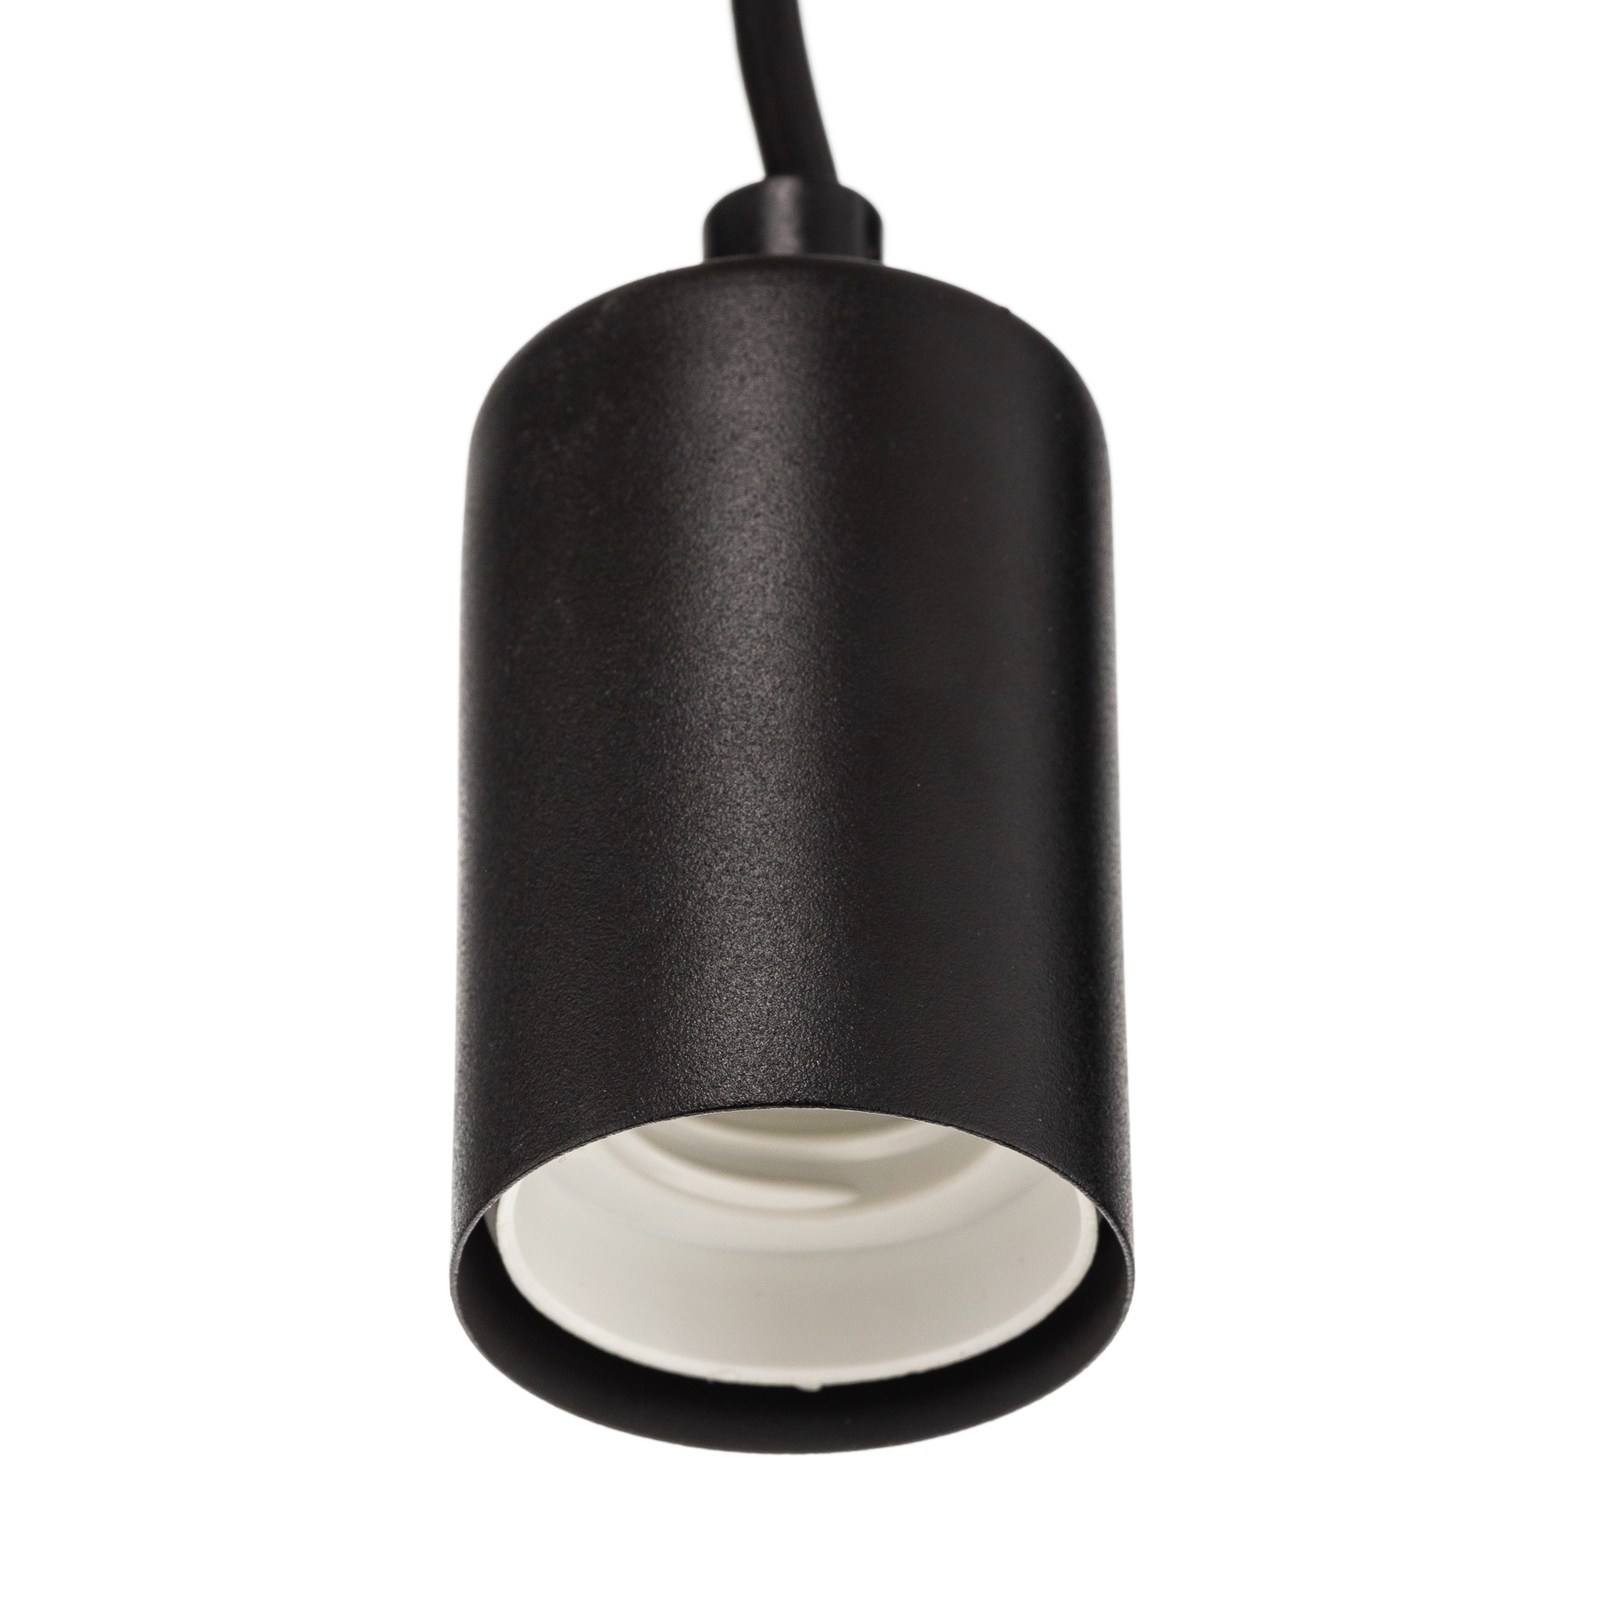 Hanglamp Tyske van hout, 5-lamps, zwart